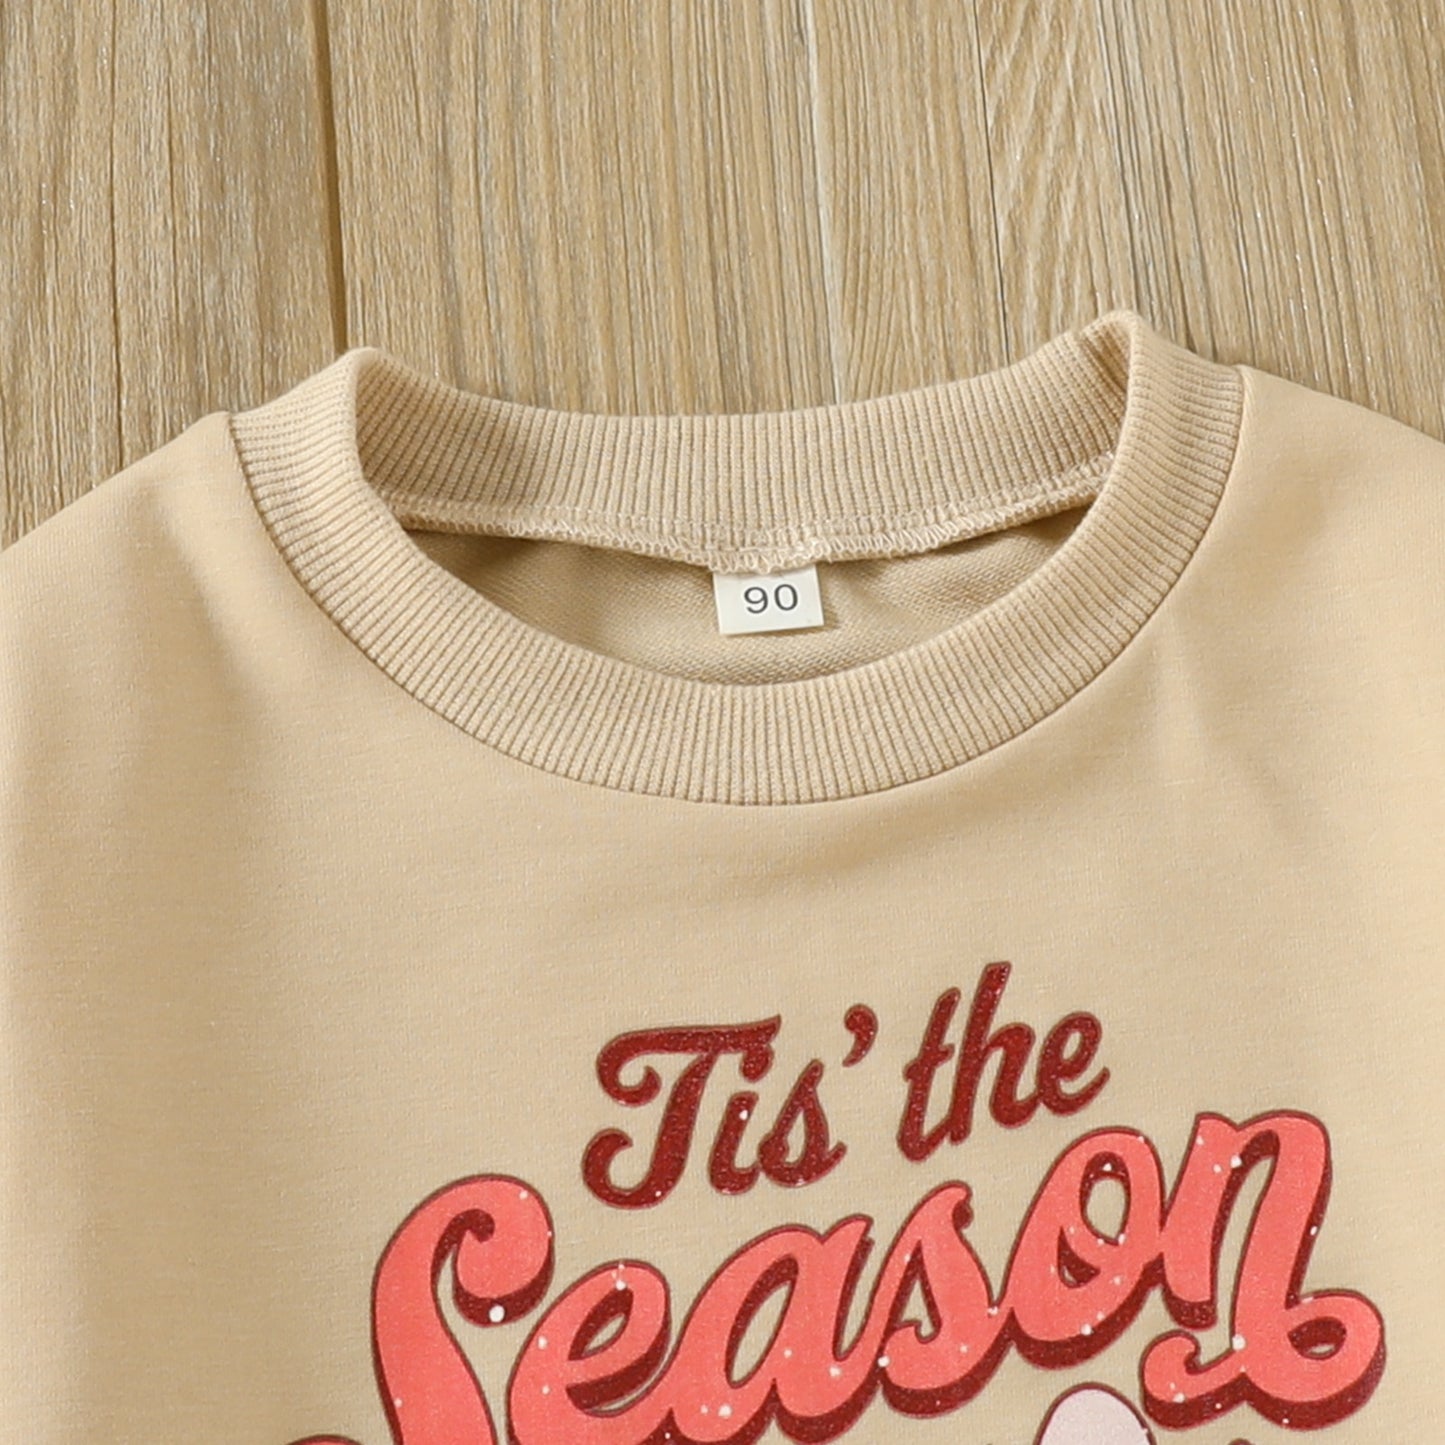 "Tis The Season" Toddler Baby Girl Boy Halloween Sweatshirt